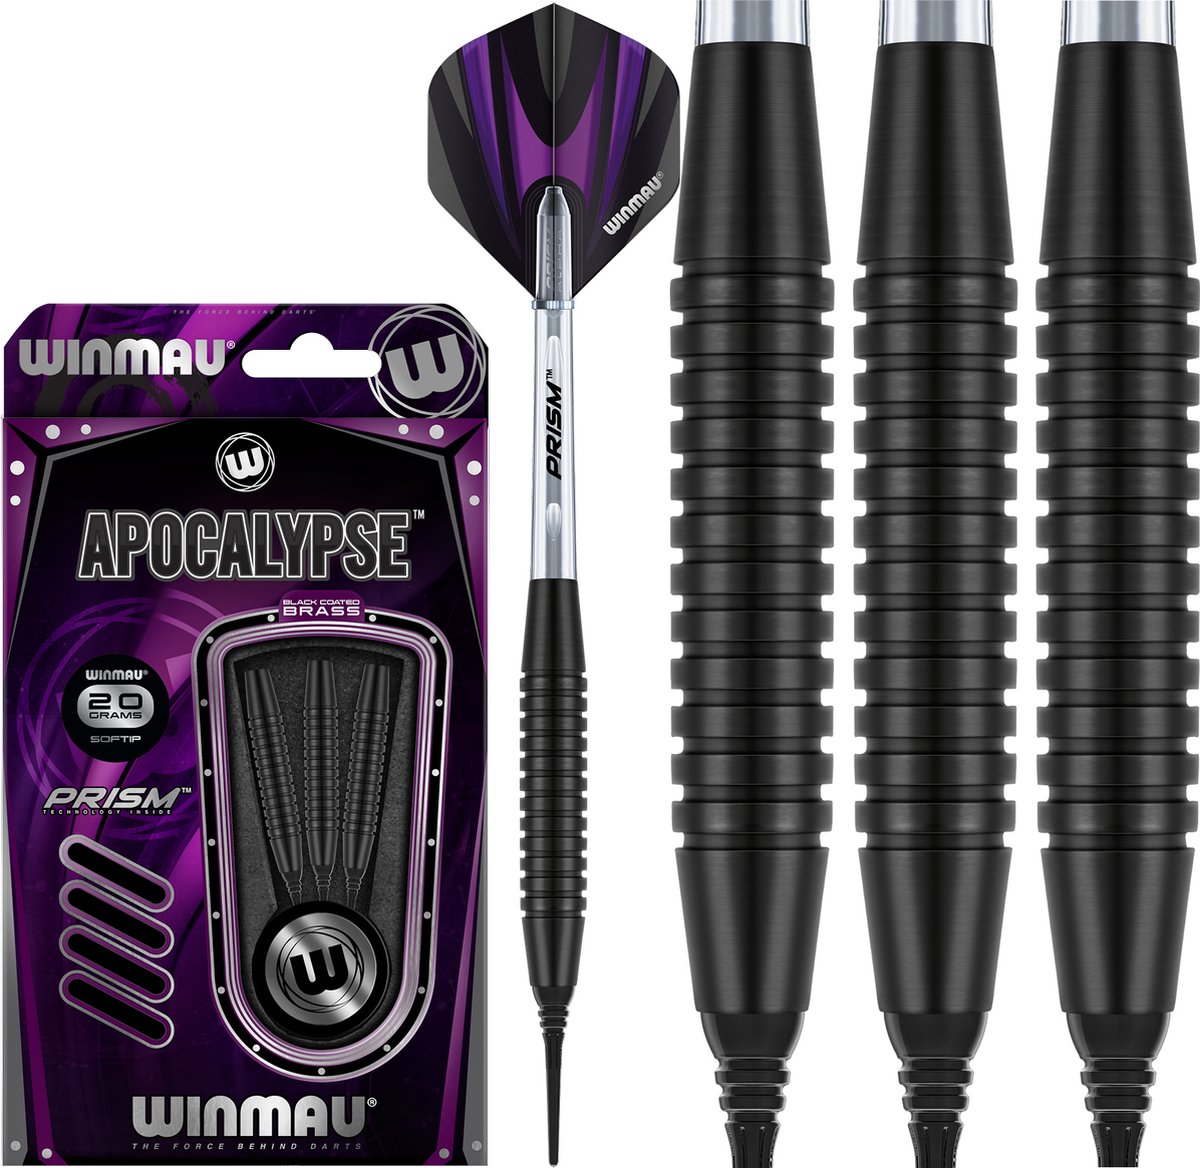 WINMAU - Apocalypse: Soft Tip Dartpijlen Professioneel - 18 gram vat/20 gram totaal gewicht